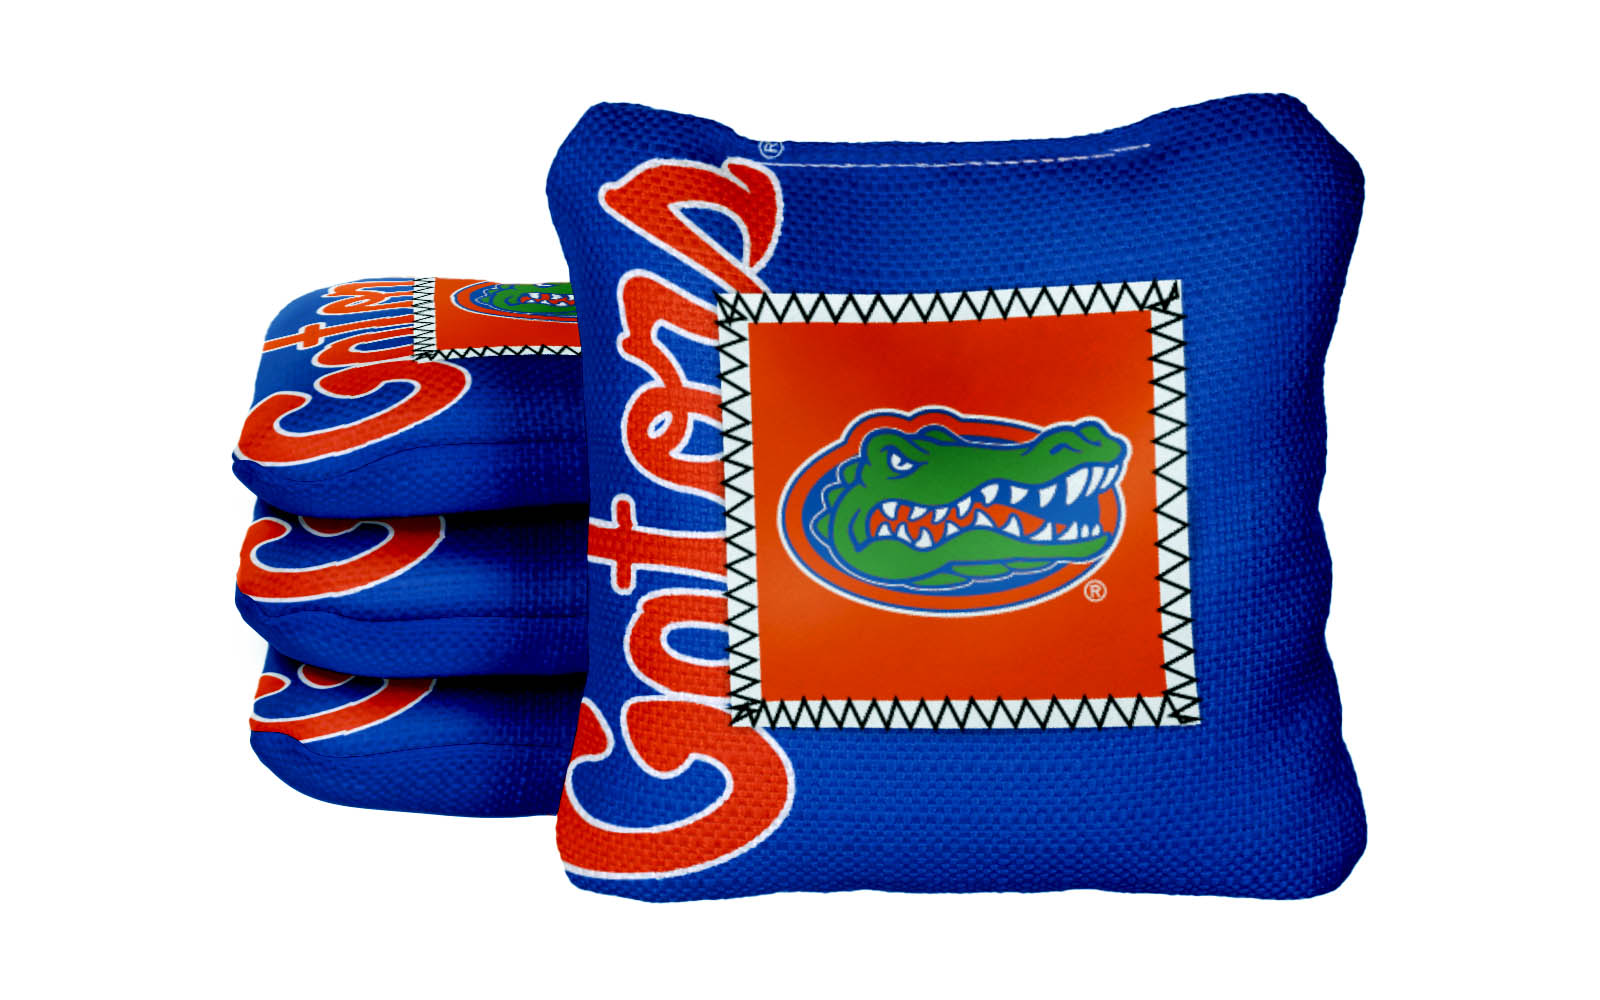 Officially Licensed Collegiate Cornhole Bags - Gamechanger Steady 2.0 - Set of 4 - University of Florida